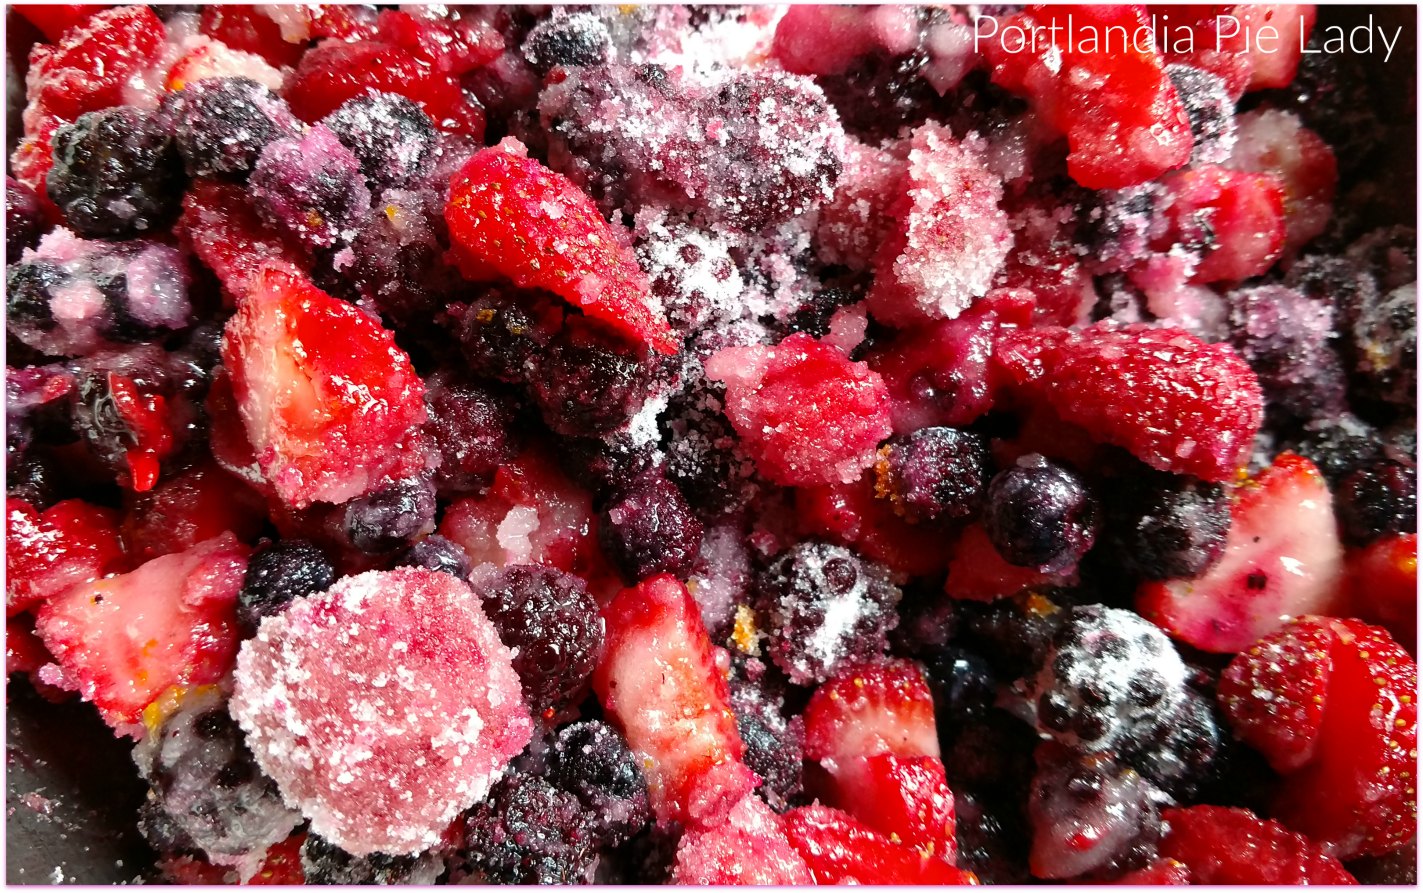 Sugared berries!